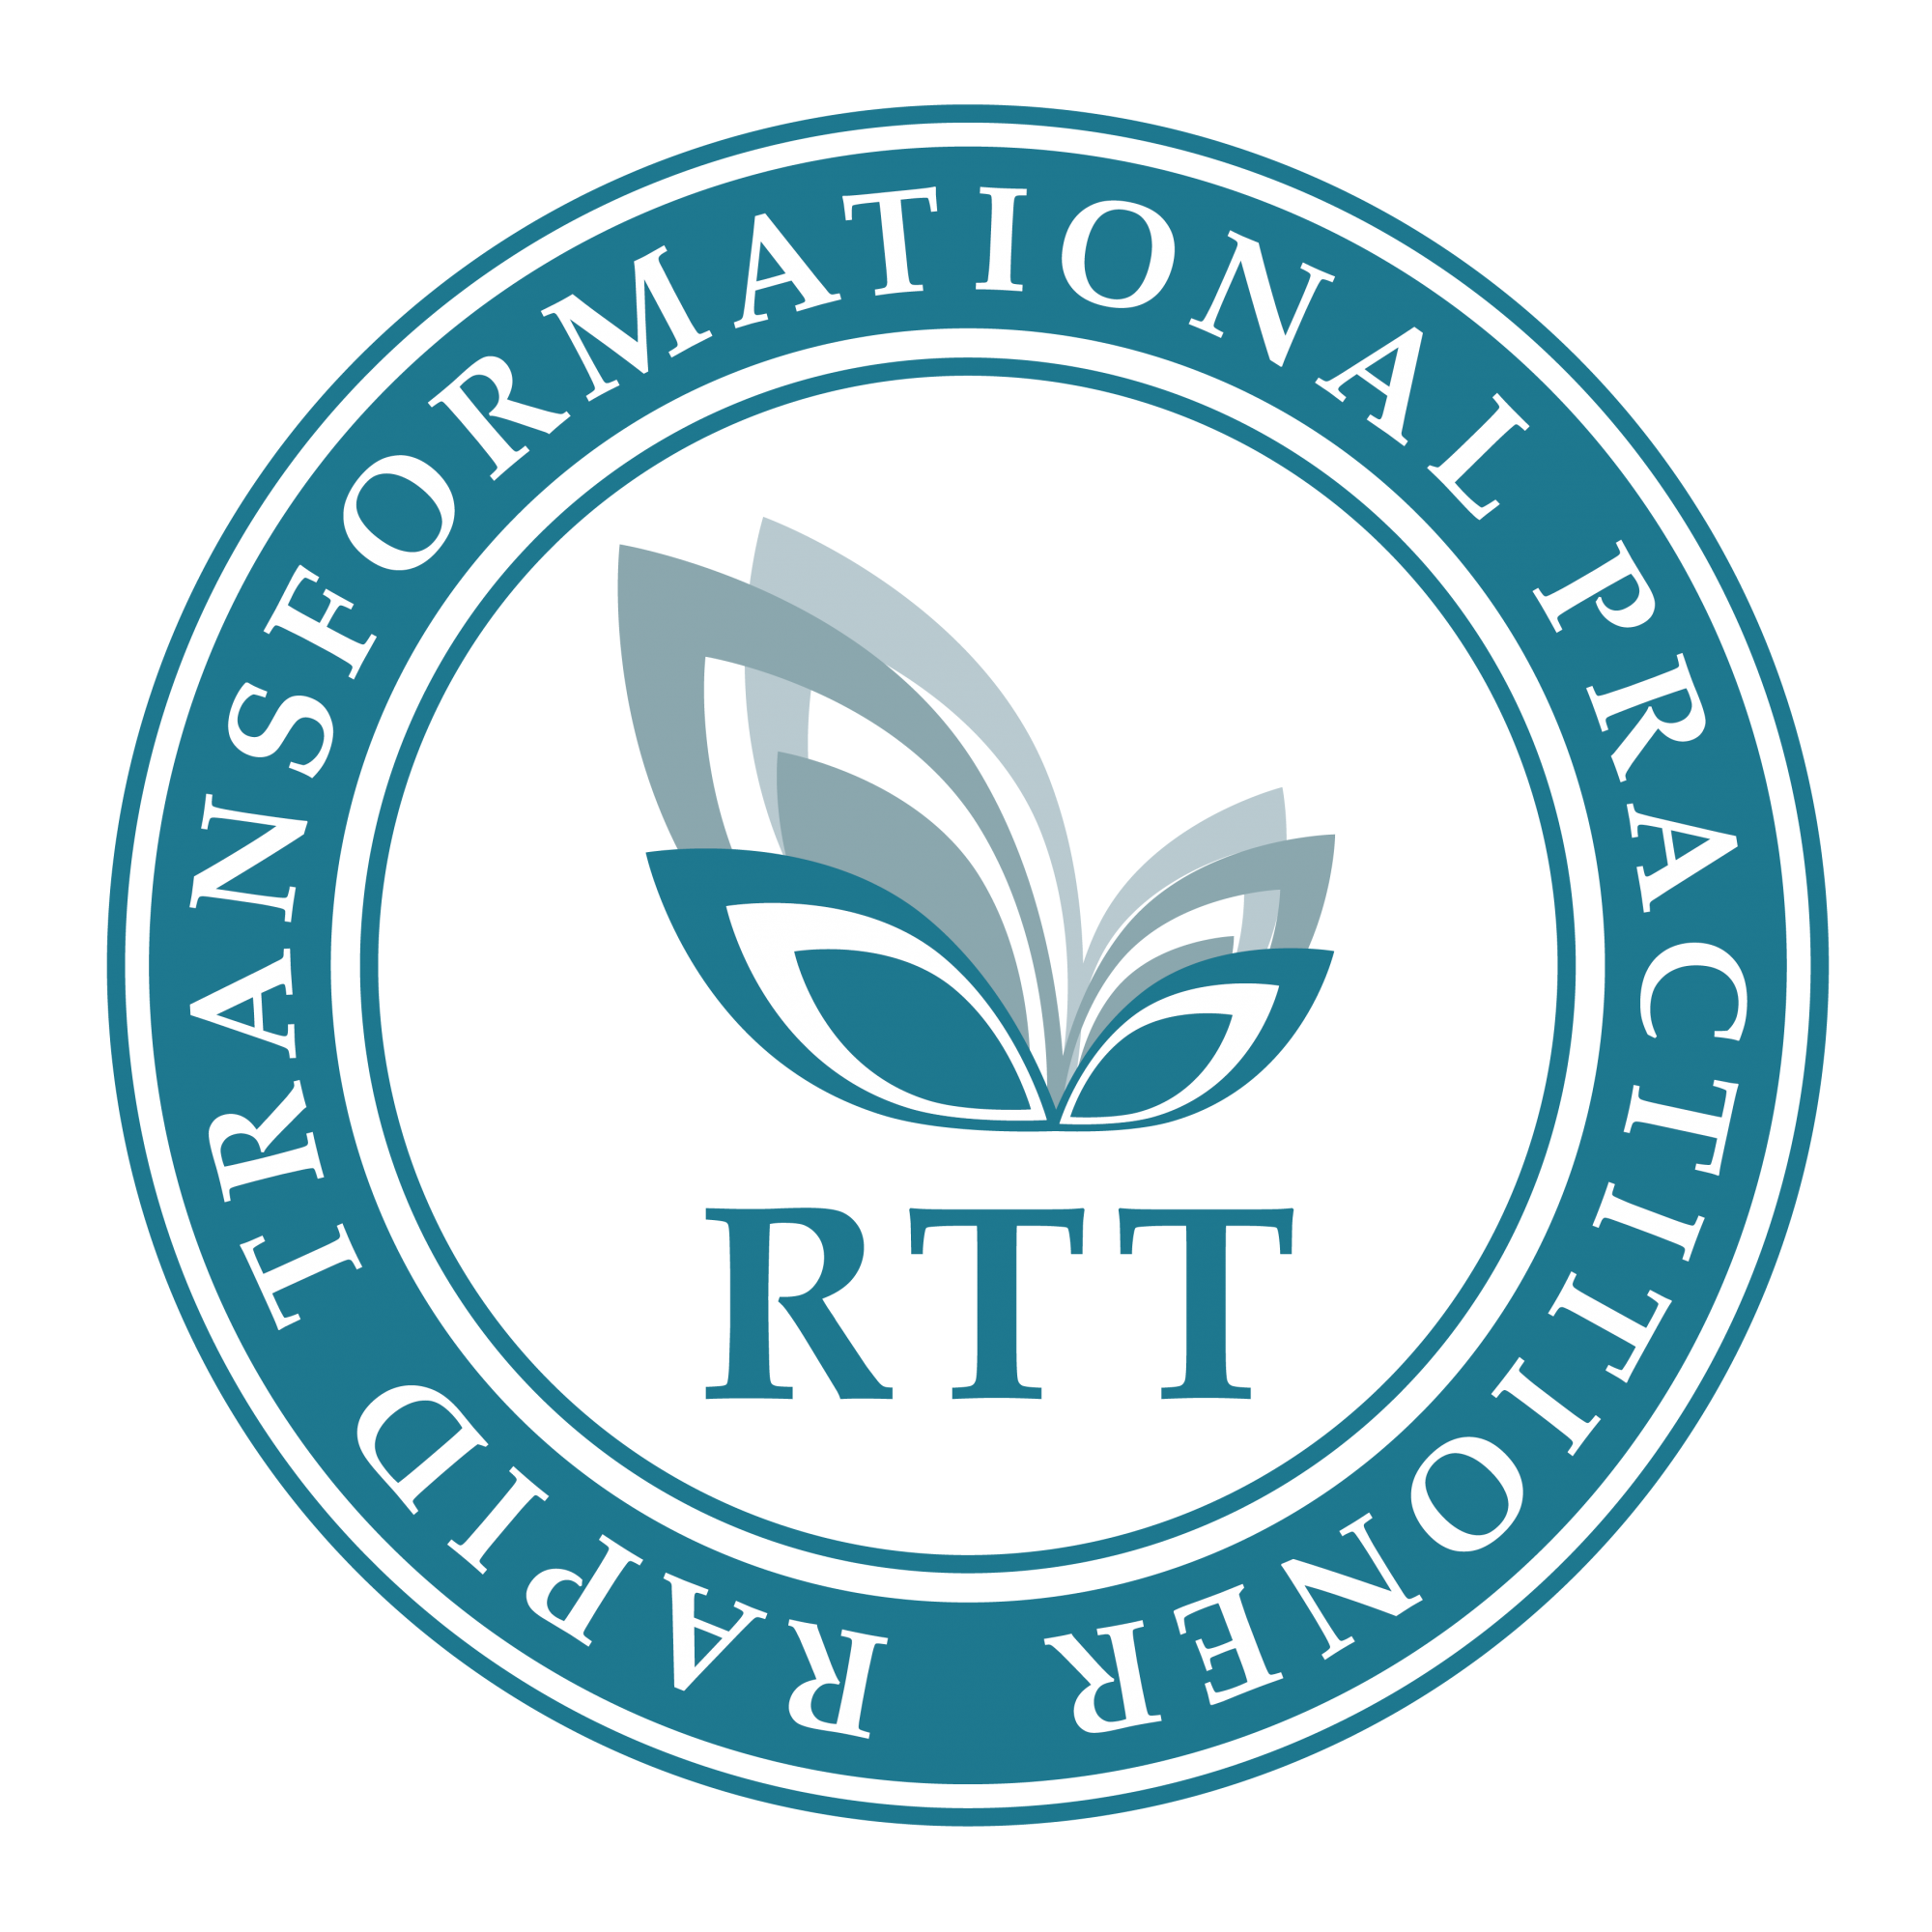 1639496453_RTT Practitioner Roundel Logo-01